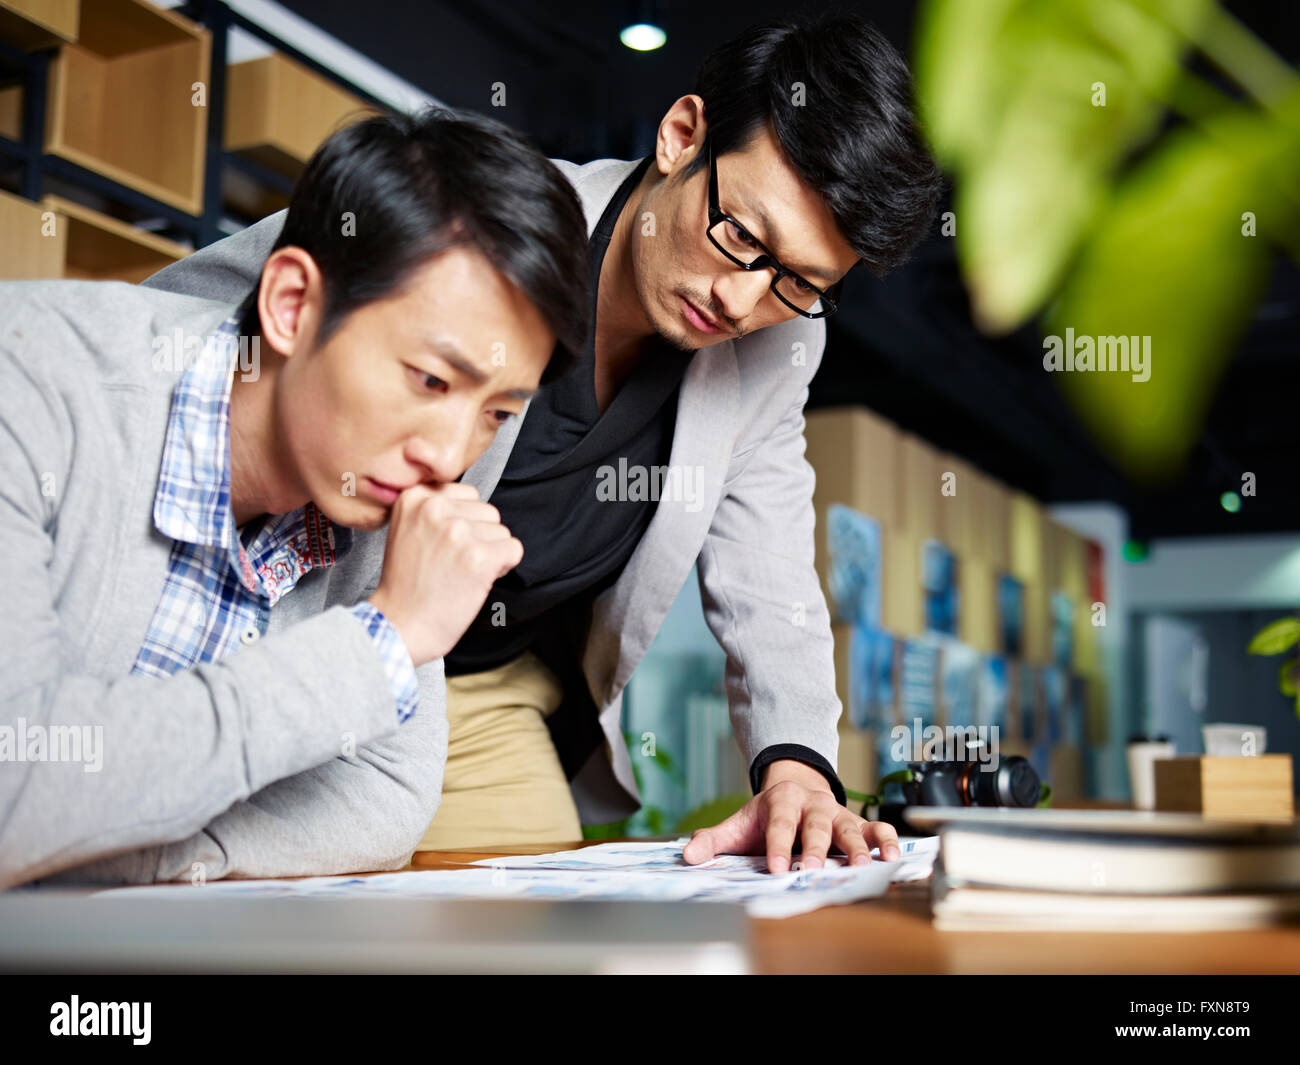 asian photographers designers working in studio. Stock Photo